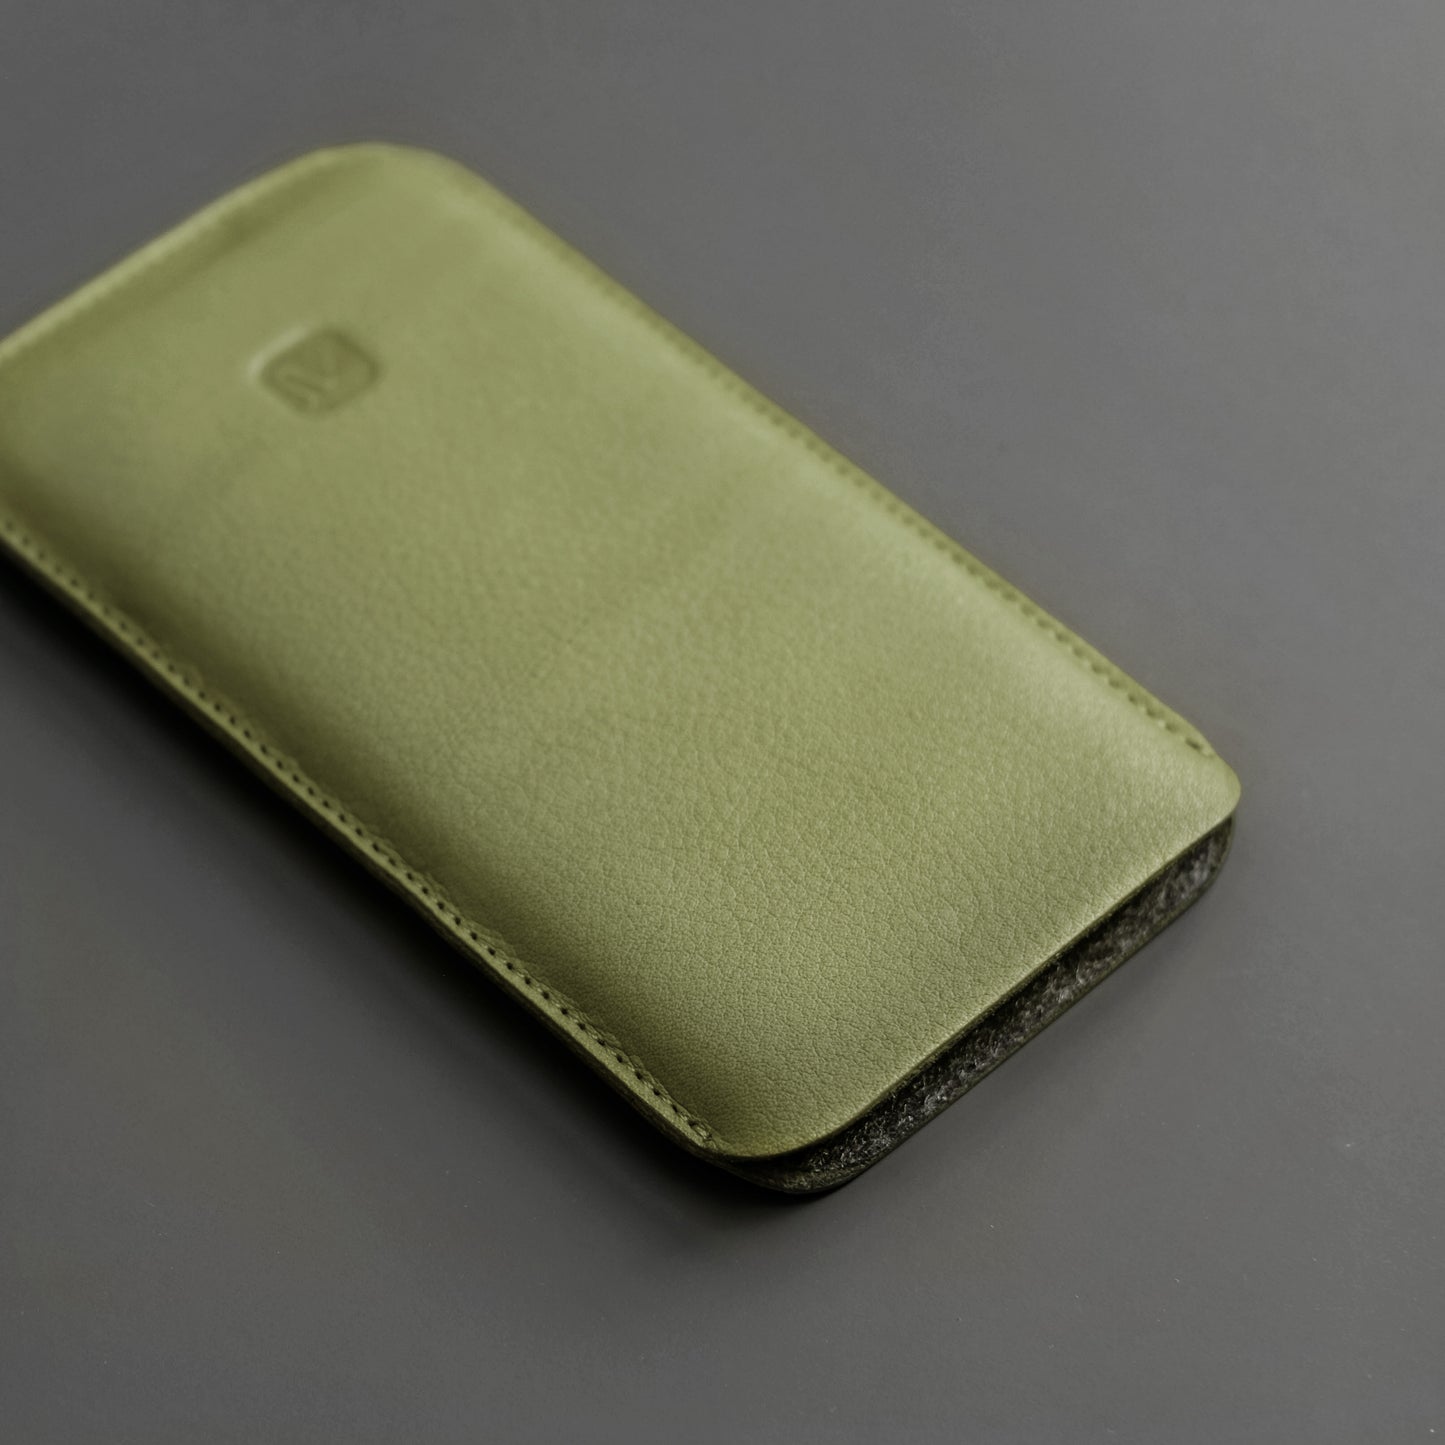 grünes iPhone Sleeve mit grauem Filz Futter